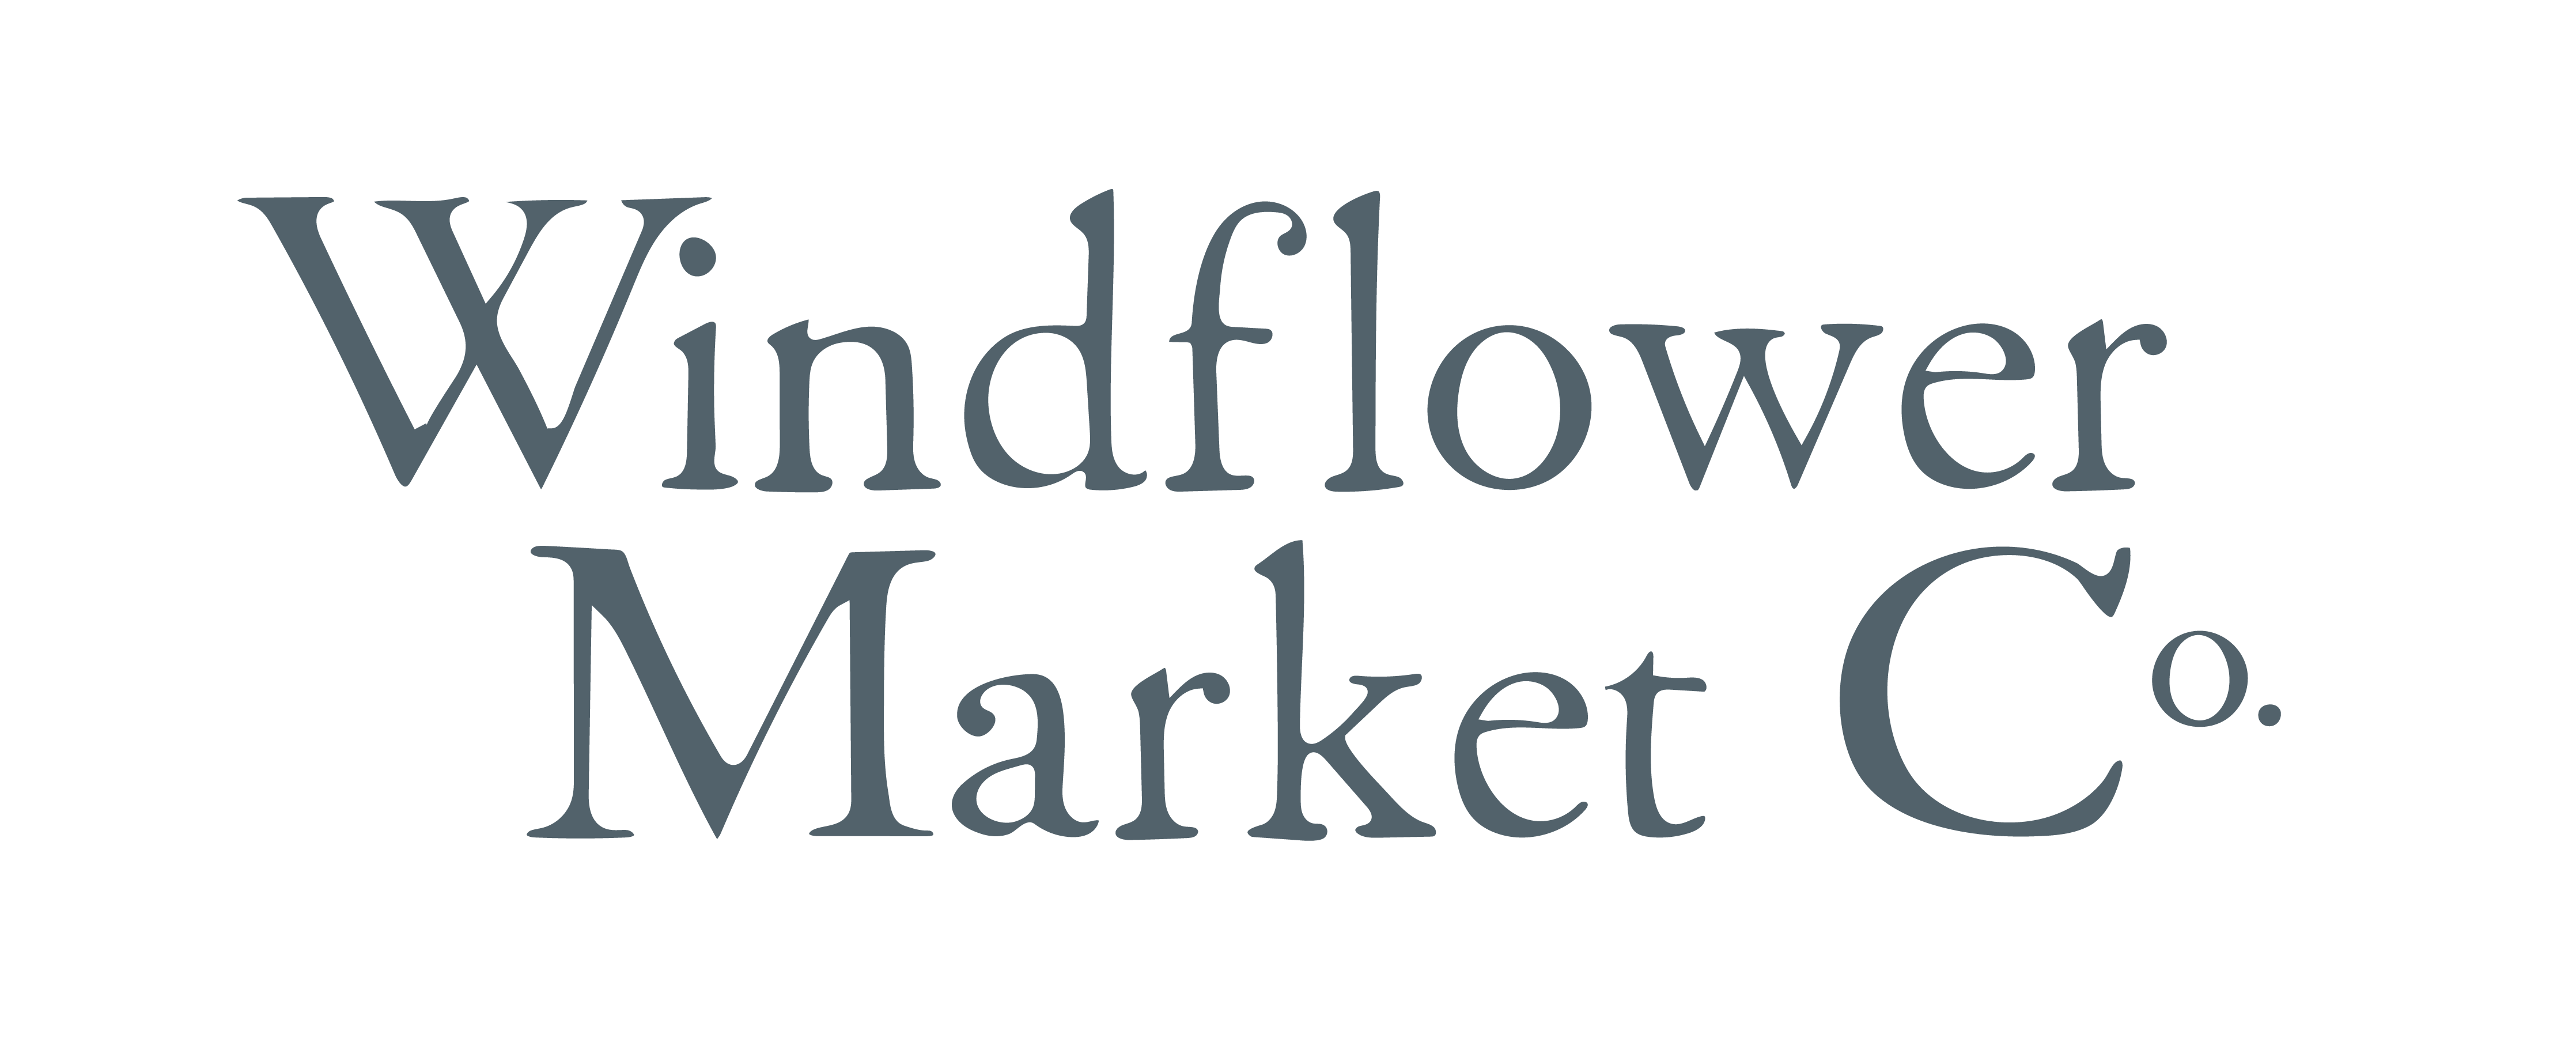 French Market Bag – Windflower Market